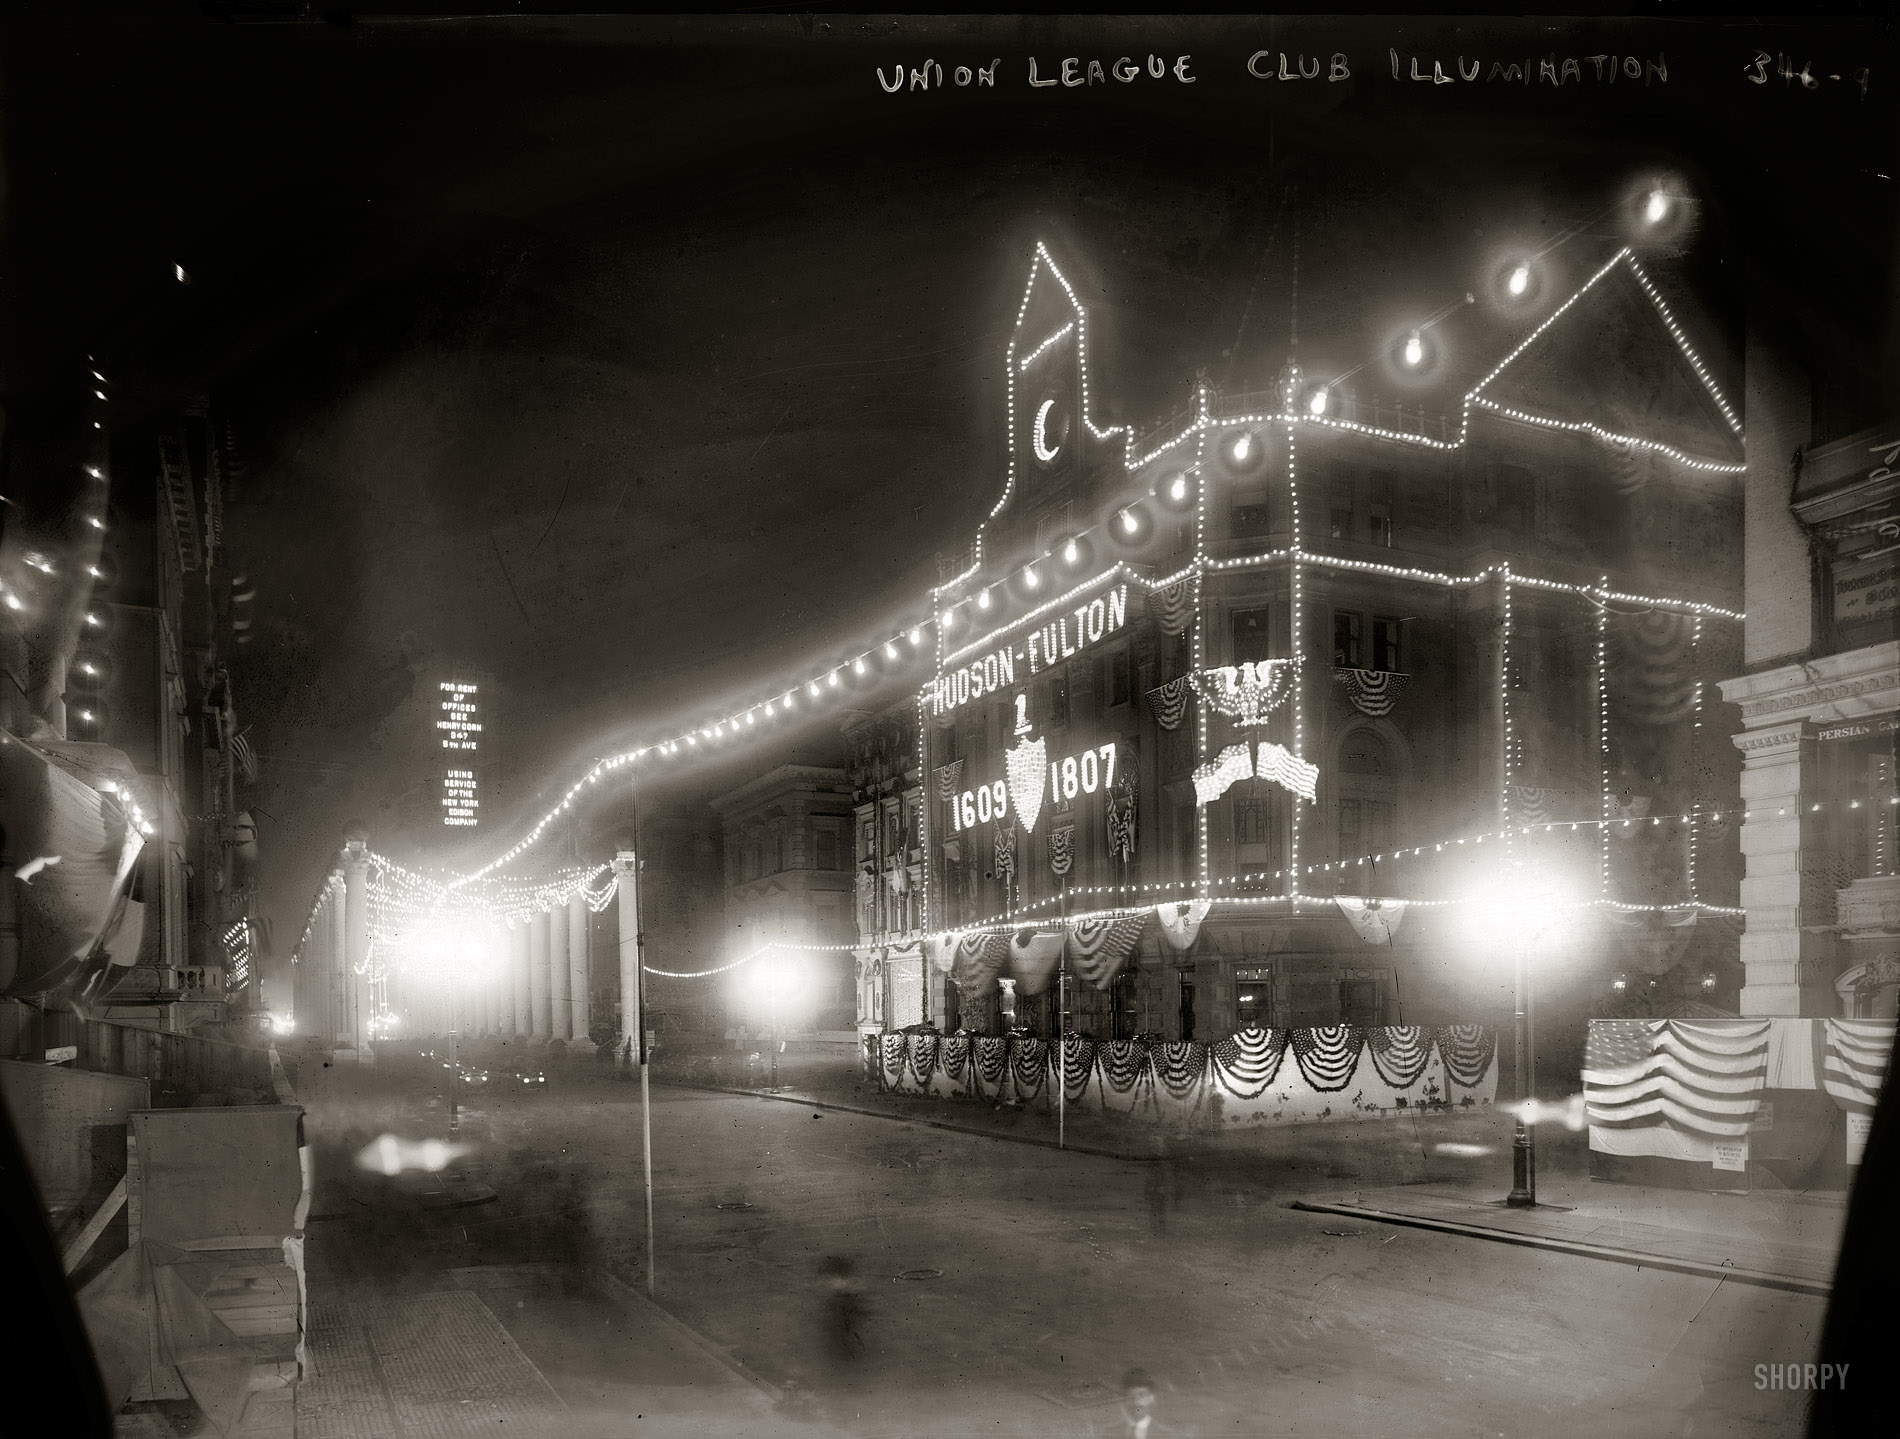 New York, 1909. "Hudson-Fulton celebration. Union League Club illumination." 8x10 glass negative, George Grantham Bain Collection. View full size.